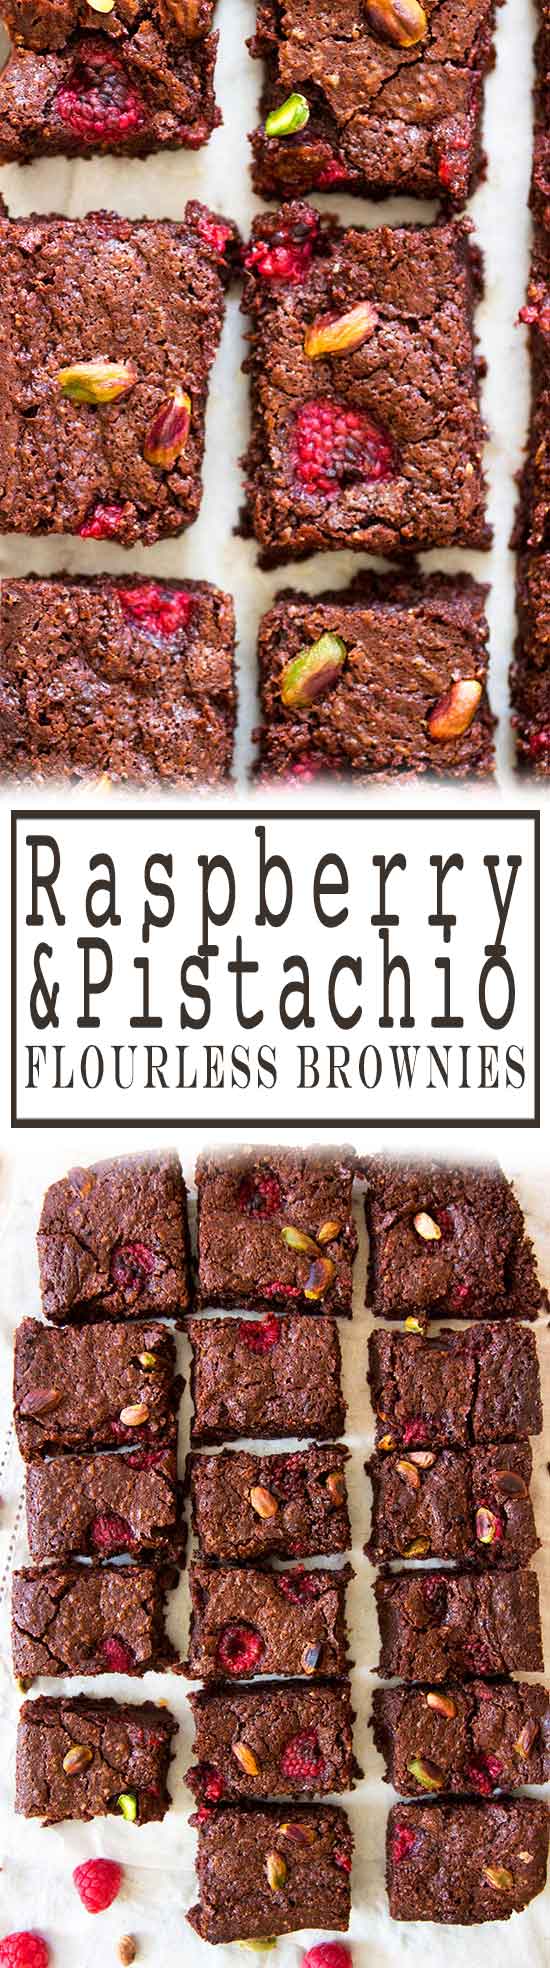 Raspberry & Pistachio Flourless Brownies from www.sprinkleofgreen.com 